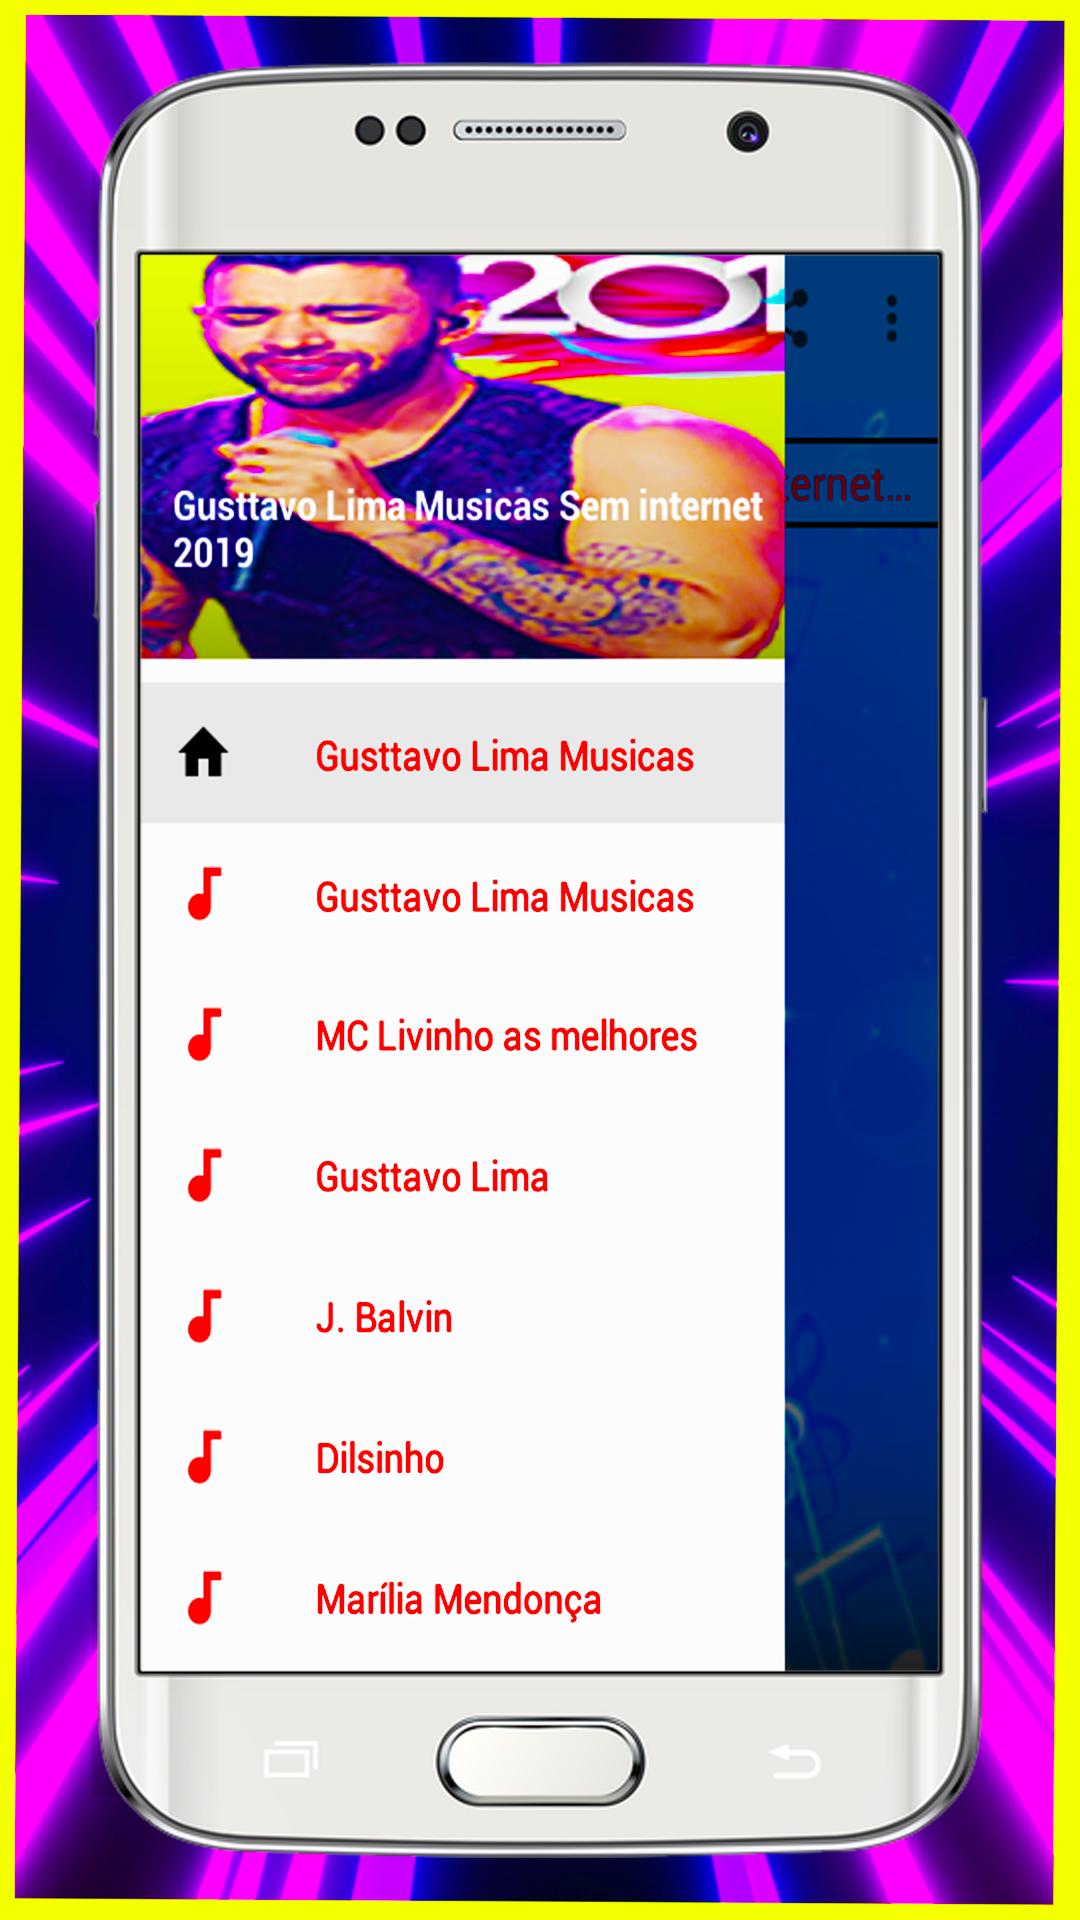 Gusttavo Lima Musicas Sem internet 2019 para Android - APK Baixar